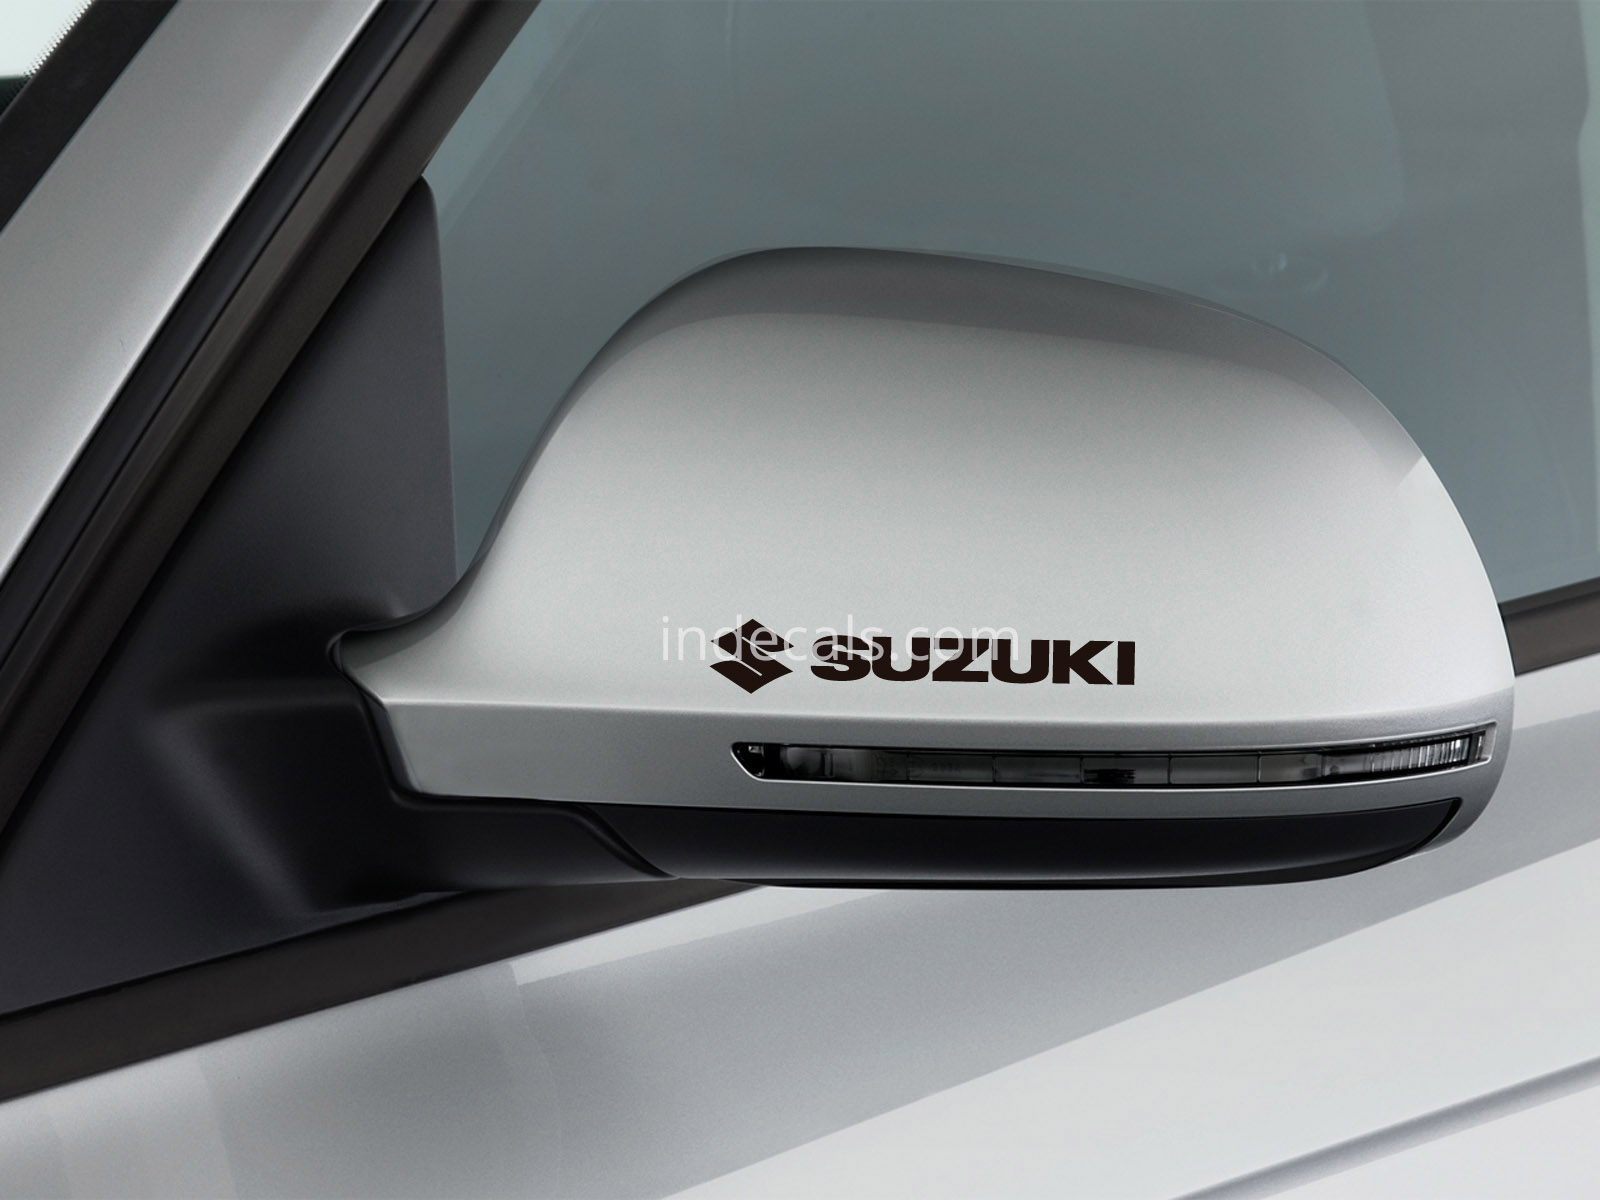 3 x Suzuki Stickers for Mirrors - Black